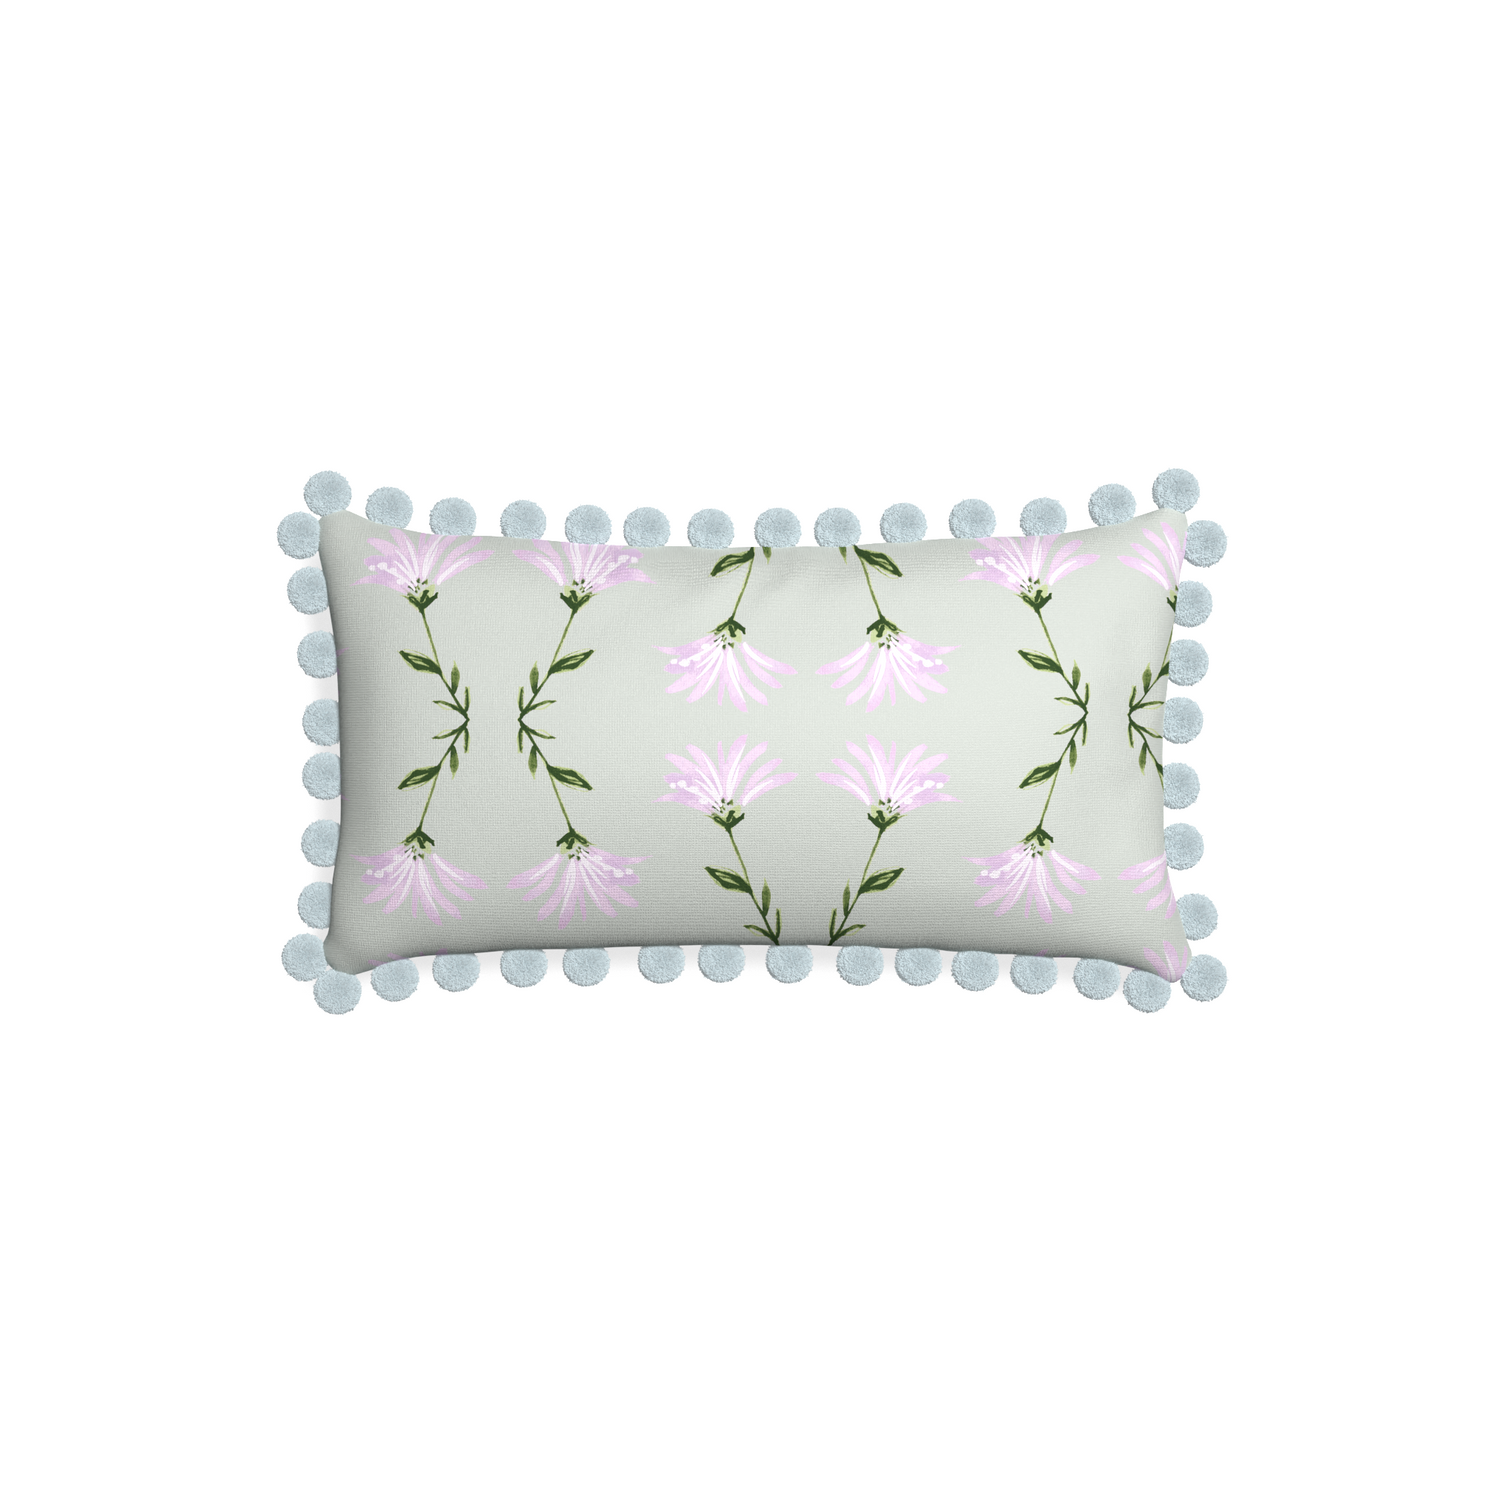 Lumbar marina sage custom pillow with powder pom pom on white background